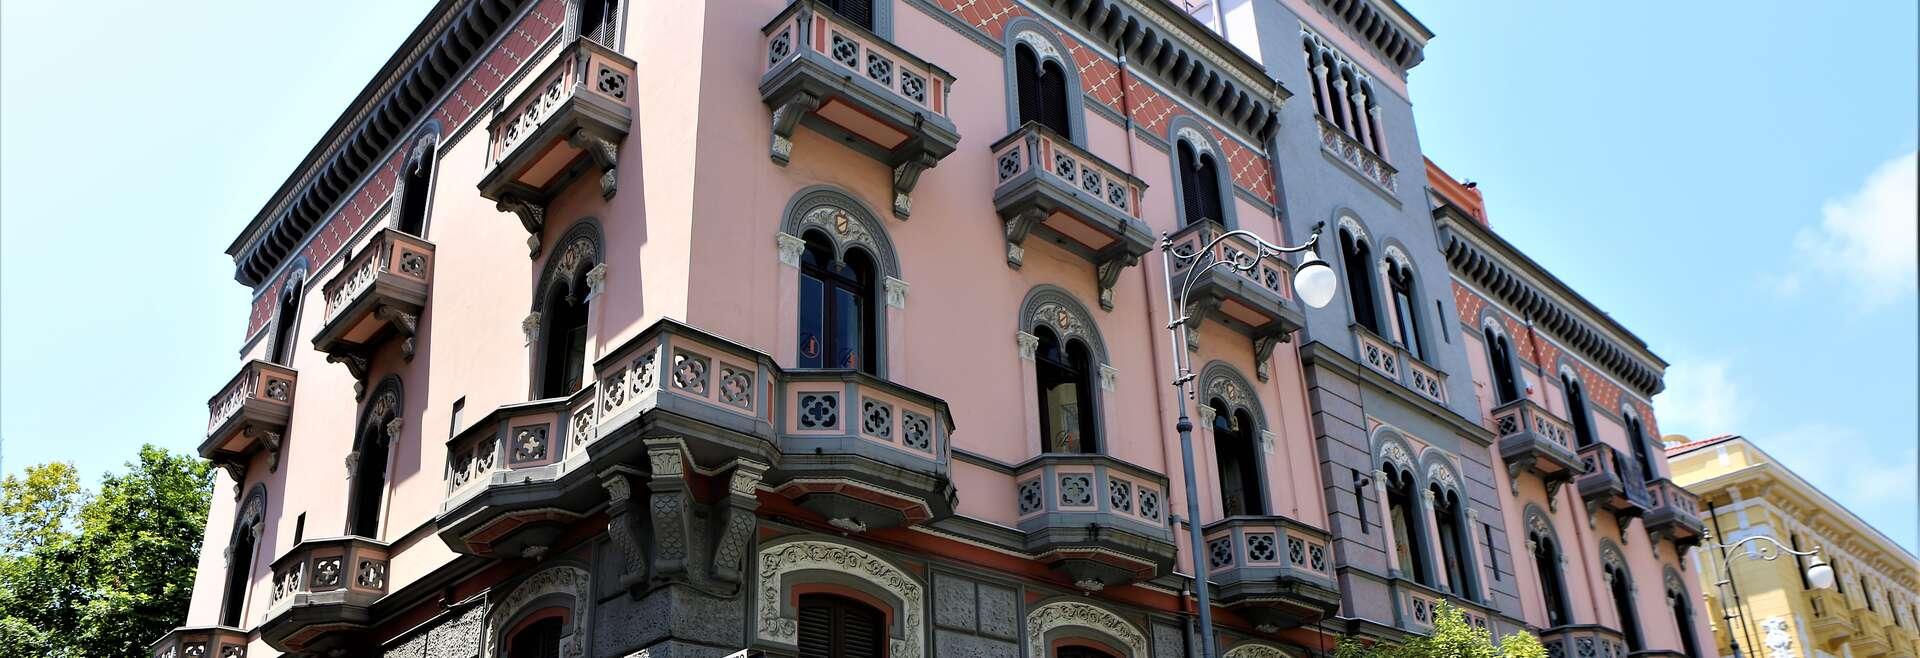 Séjour linguistique Italie, Salerno, Accademia Italiana Salerno, bâtiment